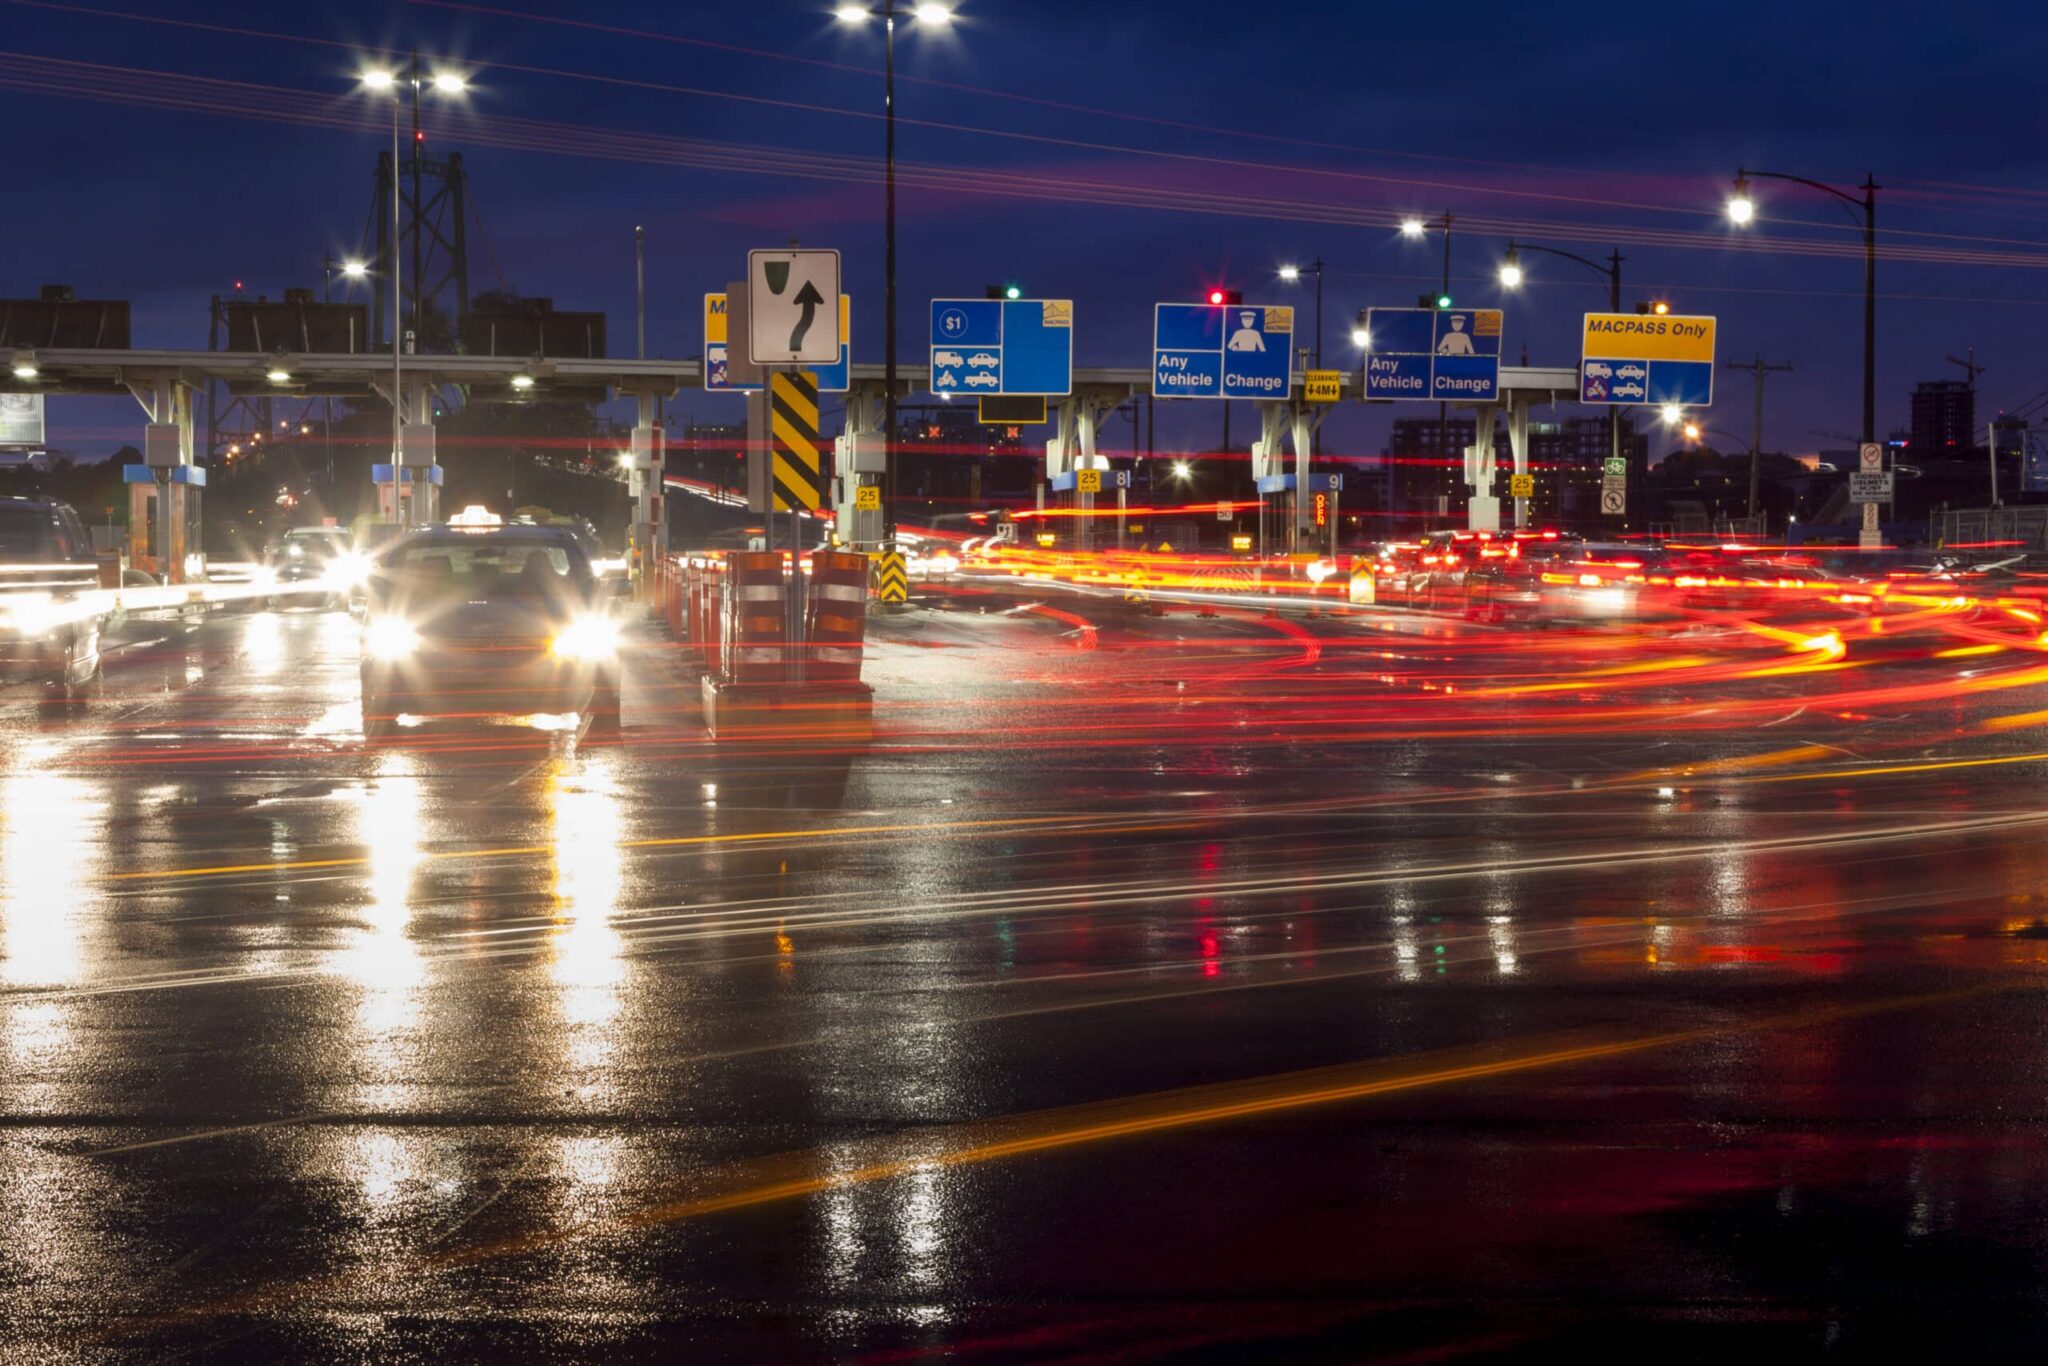 A long-exposure photo shows vehicles driving through the Macdonald Bridge tolls.